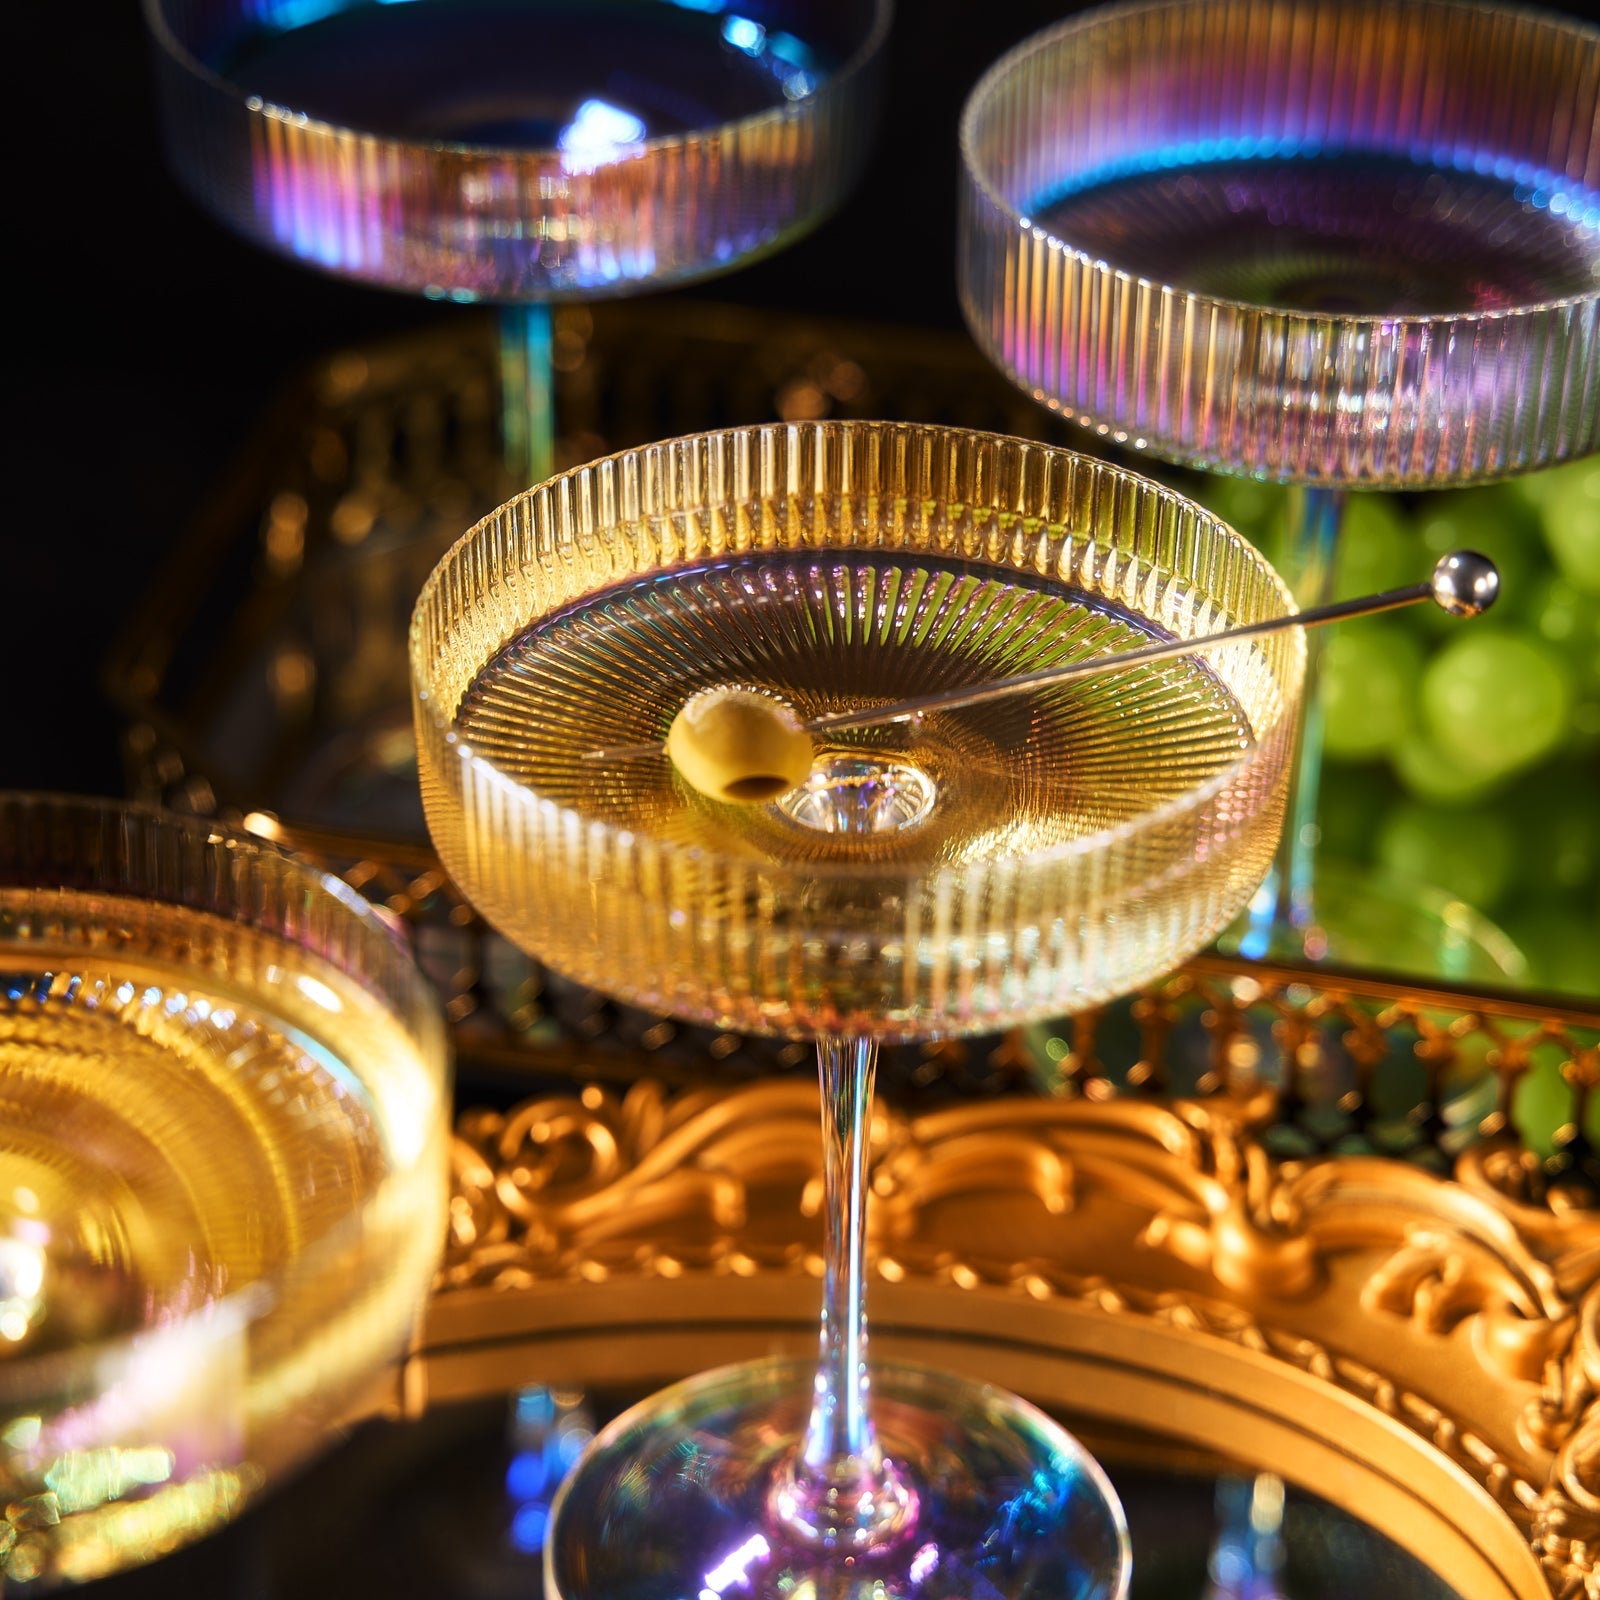 whatAmug Set of 2 Iridescent Champagne Coupe Glasses, Rainbow Ribbed Glass  Set Gifts, Colorful Cockt…See more whatAmug Set of 2 Iridescent Champagne